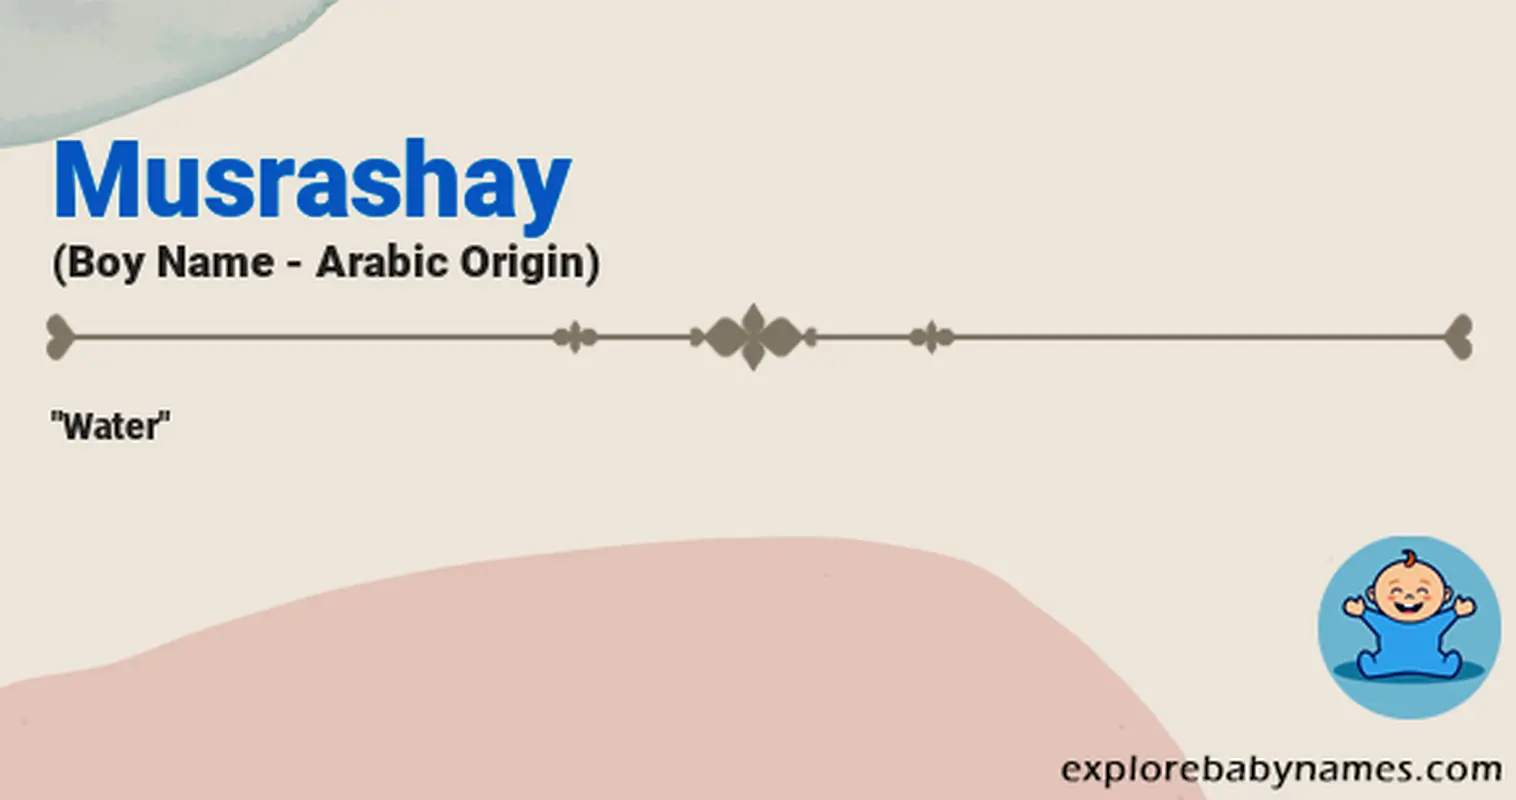 Meaning of Musrashay